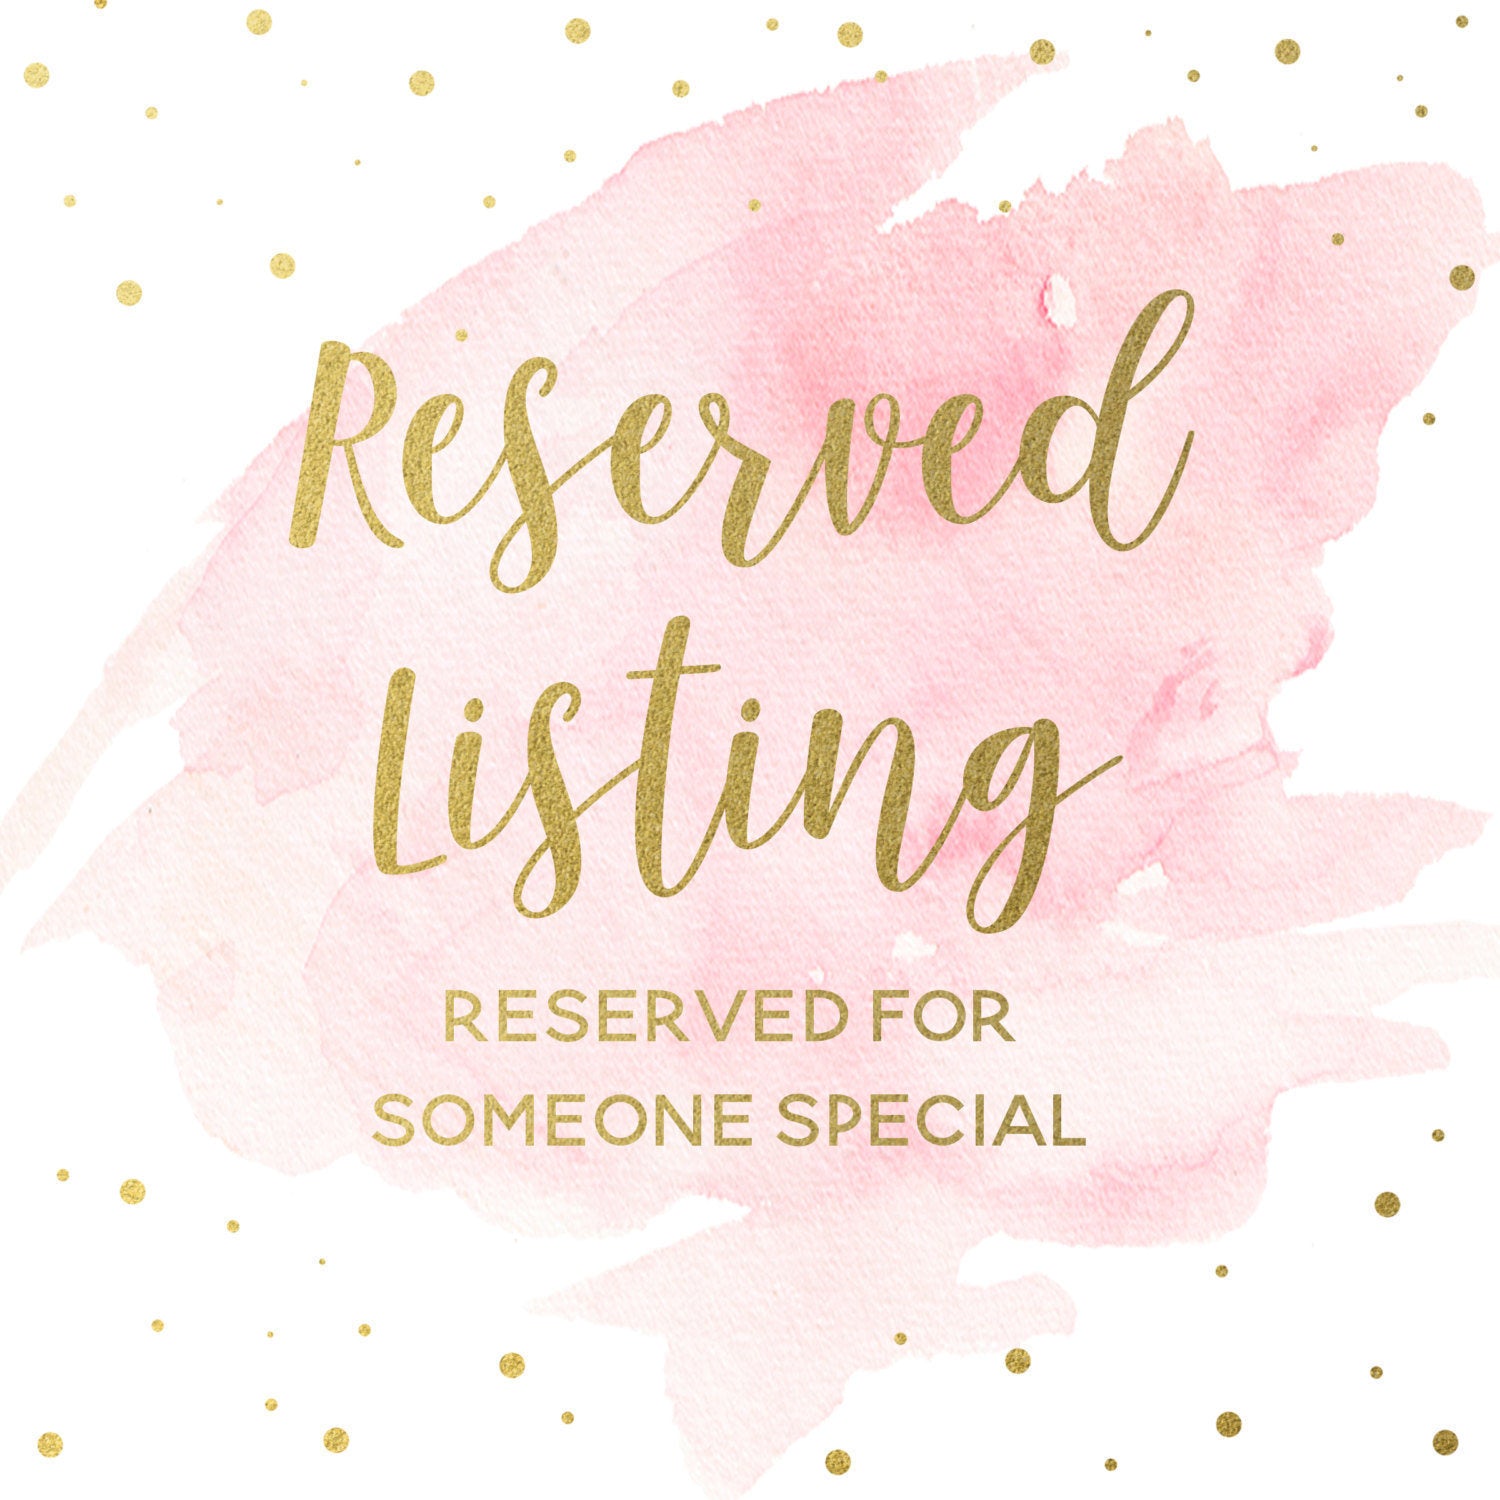 Reserved Listing - Tera N.